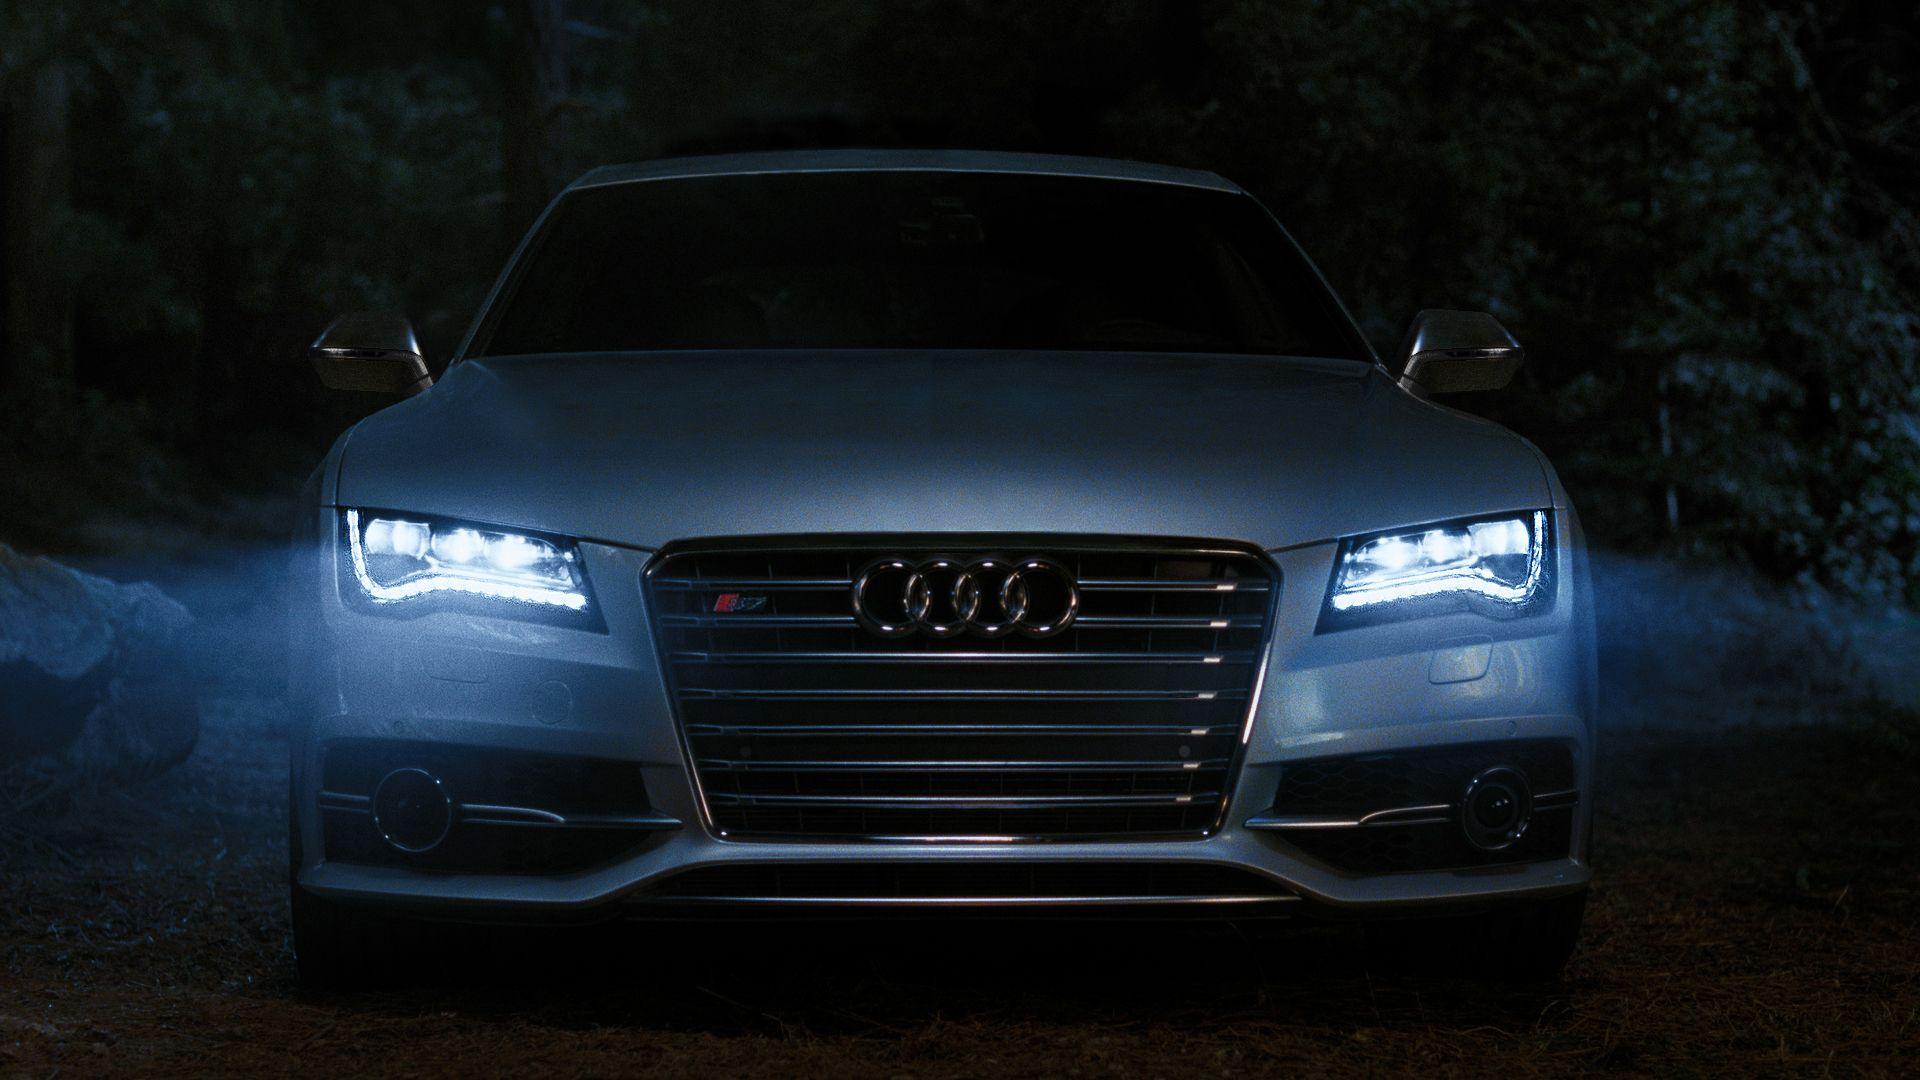 Audi LED Lights Actually Save Fuel, Cut Emissions, EU Says